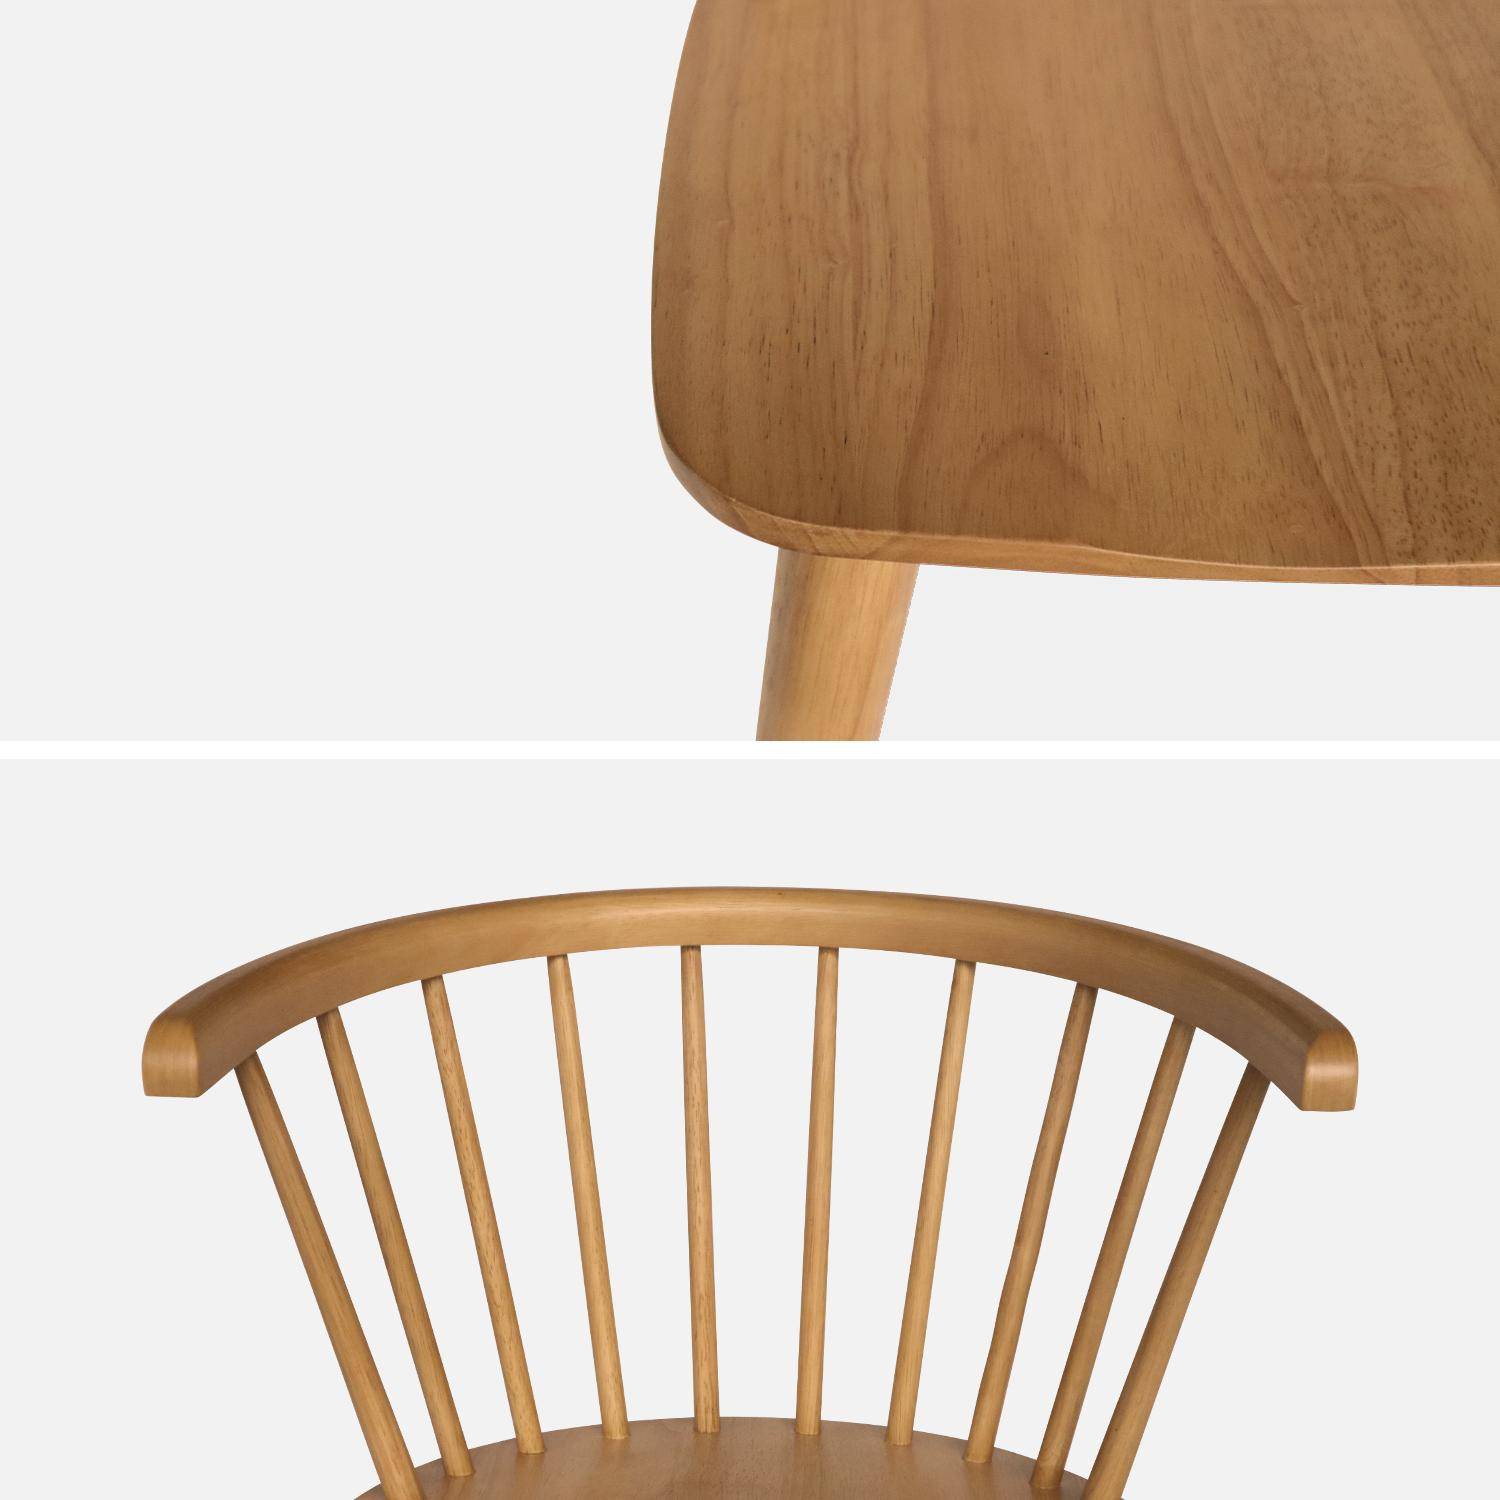 Lote de 2 sillas de bar de madera natural y contrachapada, Paula, An 51 x Pr 53 x Al 75cm,sweeek,Photo5